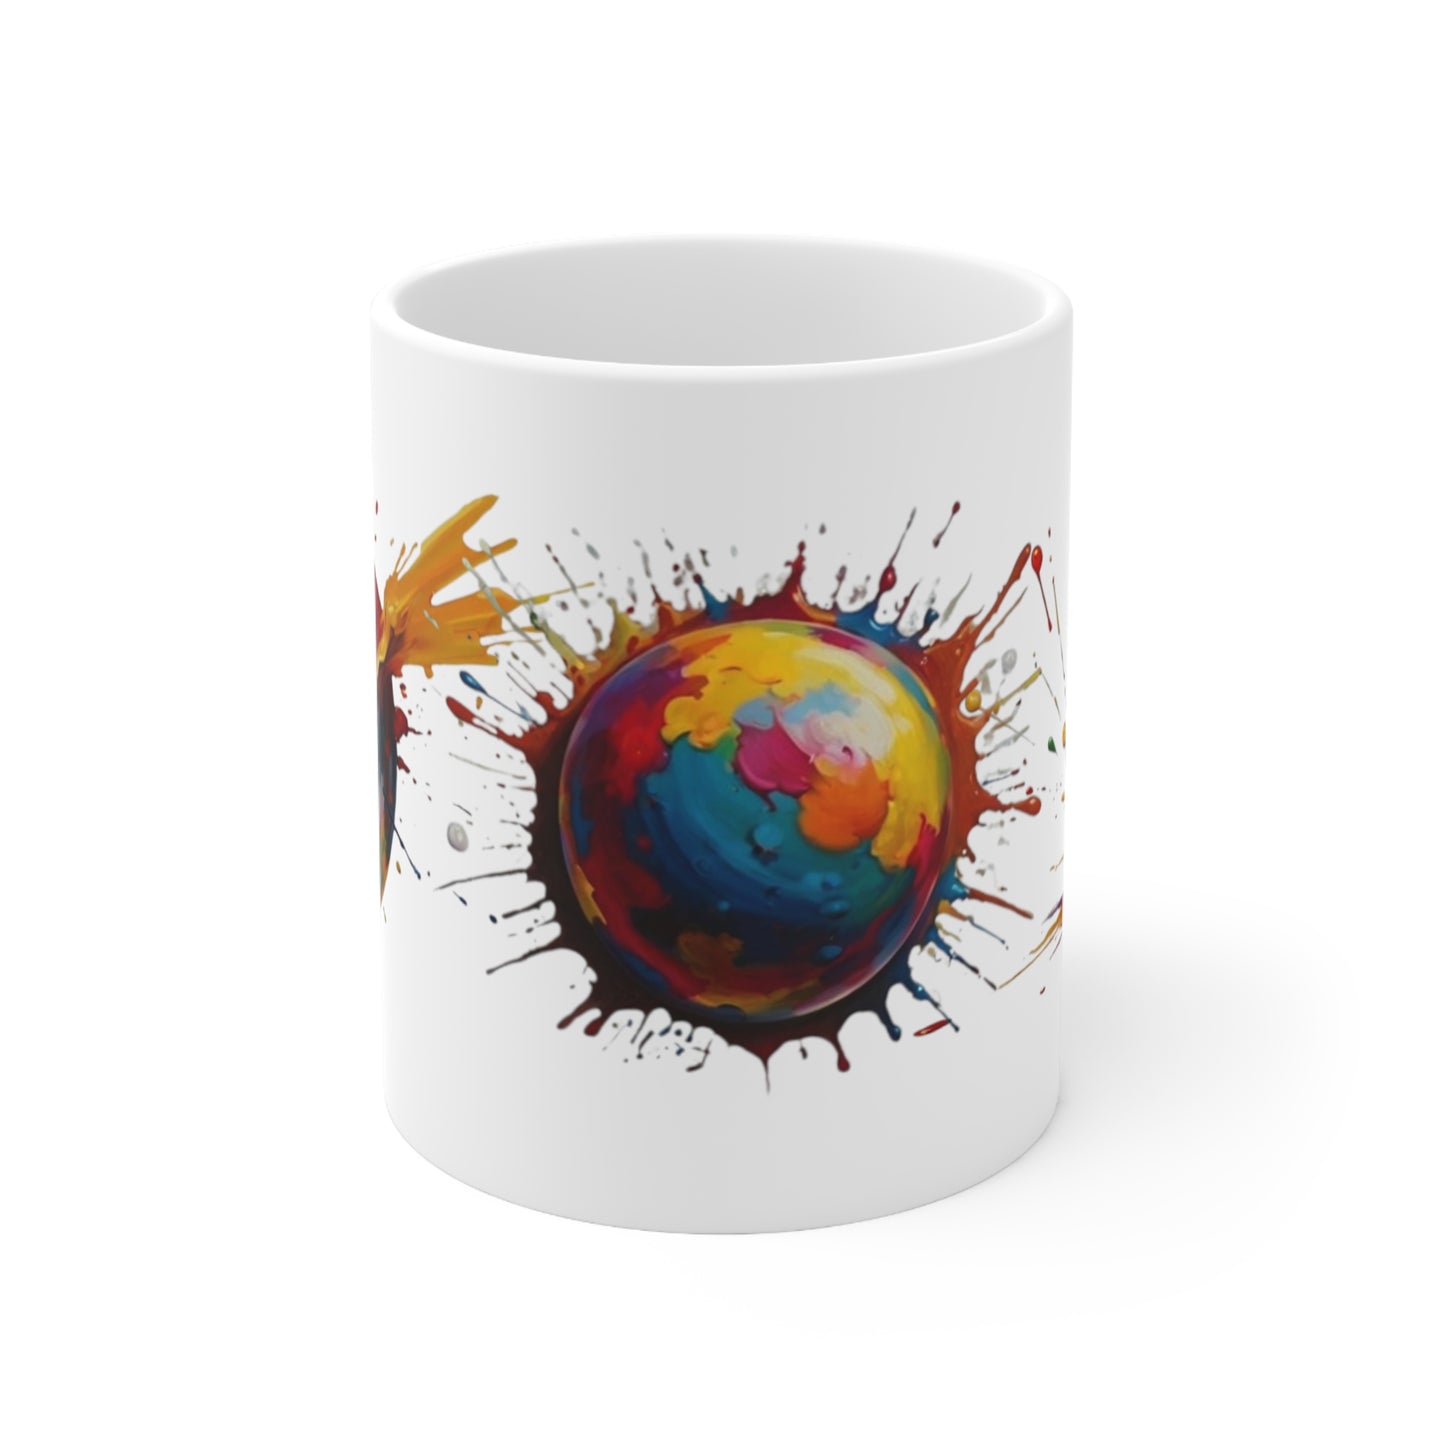 Messy Splatter Painted Cannonballs Mug - Ceramic Coffee Mug 11oz